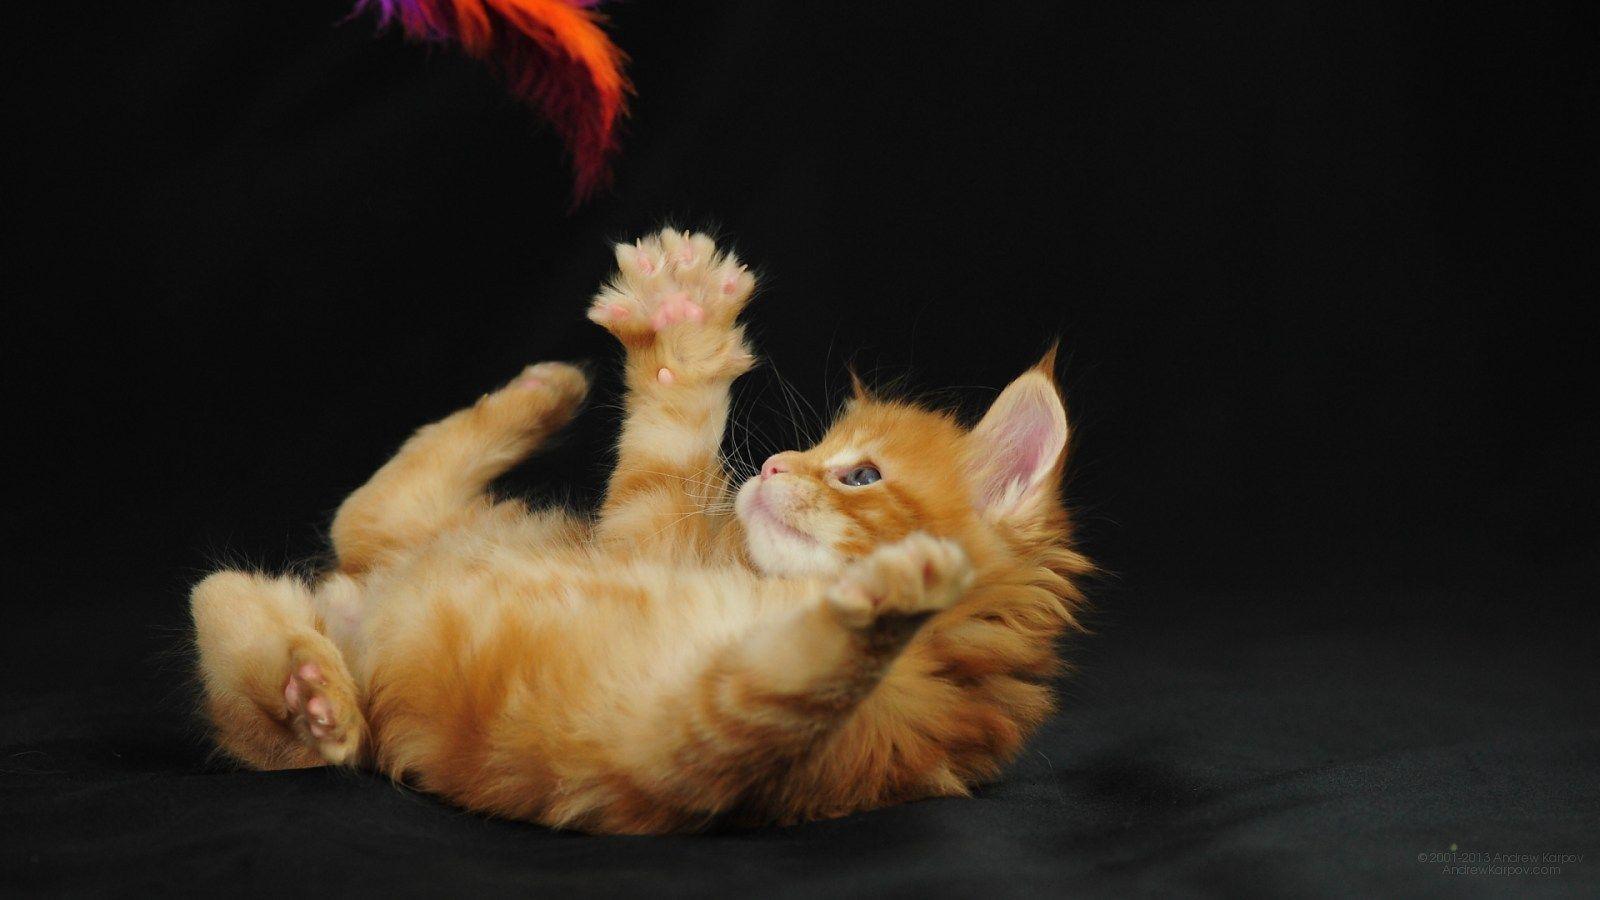 Picture lolcat Funny Cat desktop wallpaper picture 1600 x